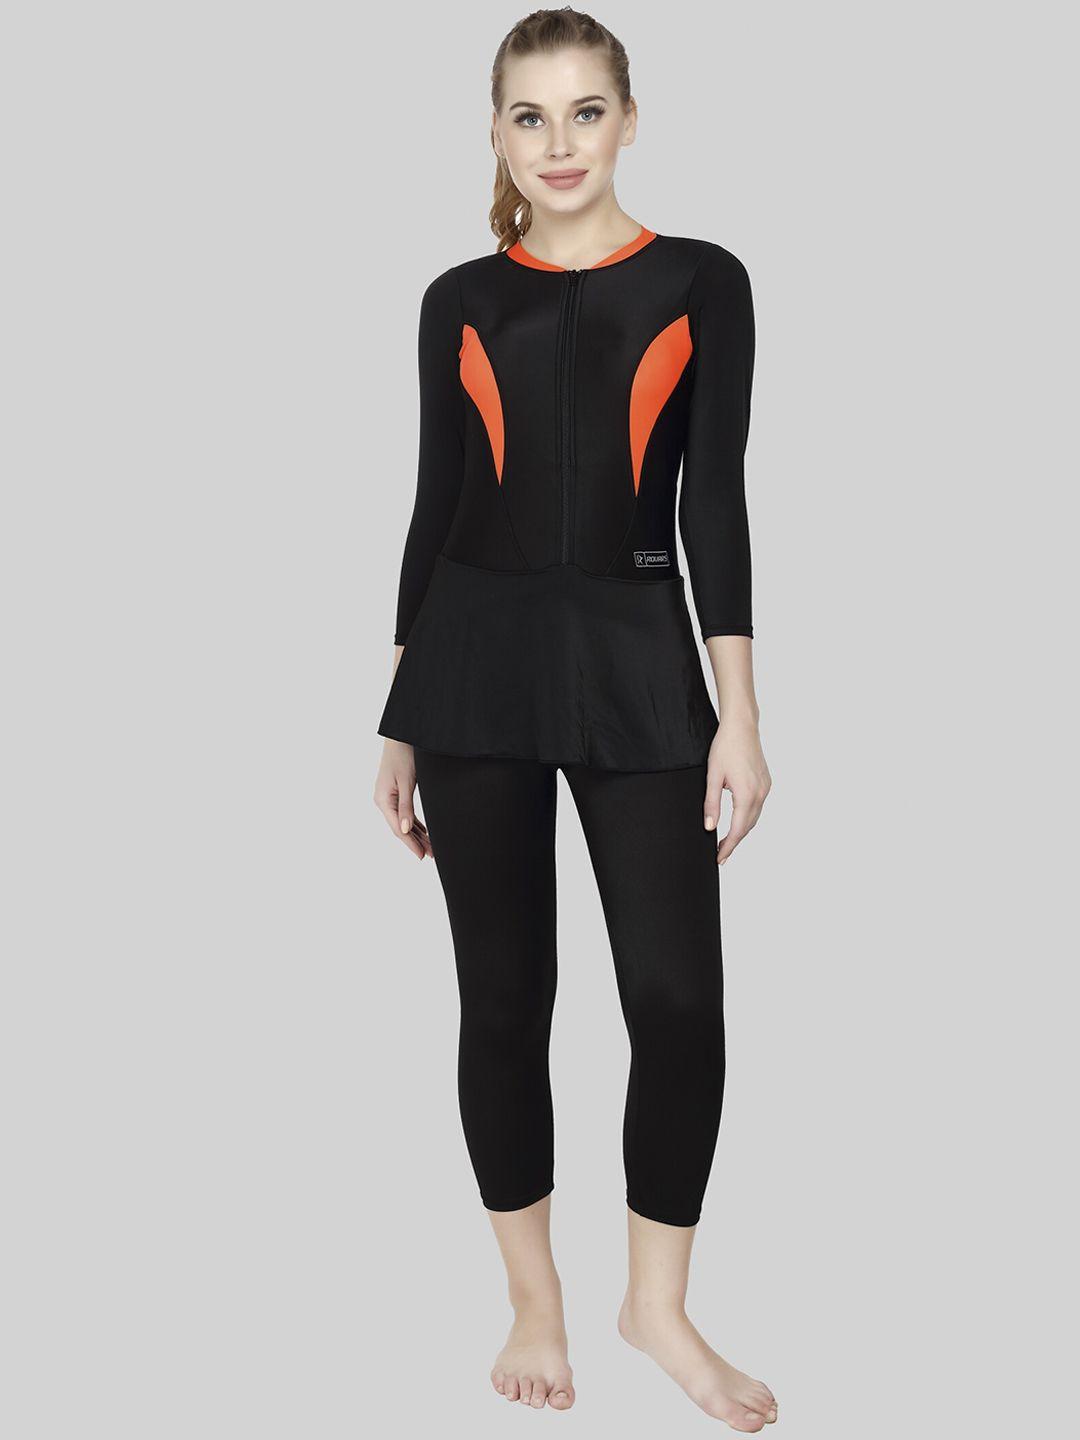 rovars women black & orange solid padded swimming dress